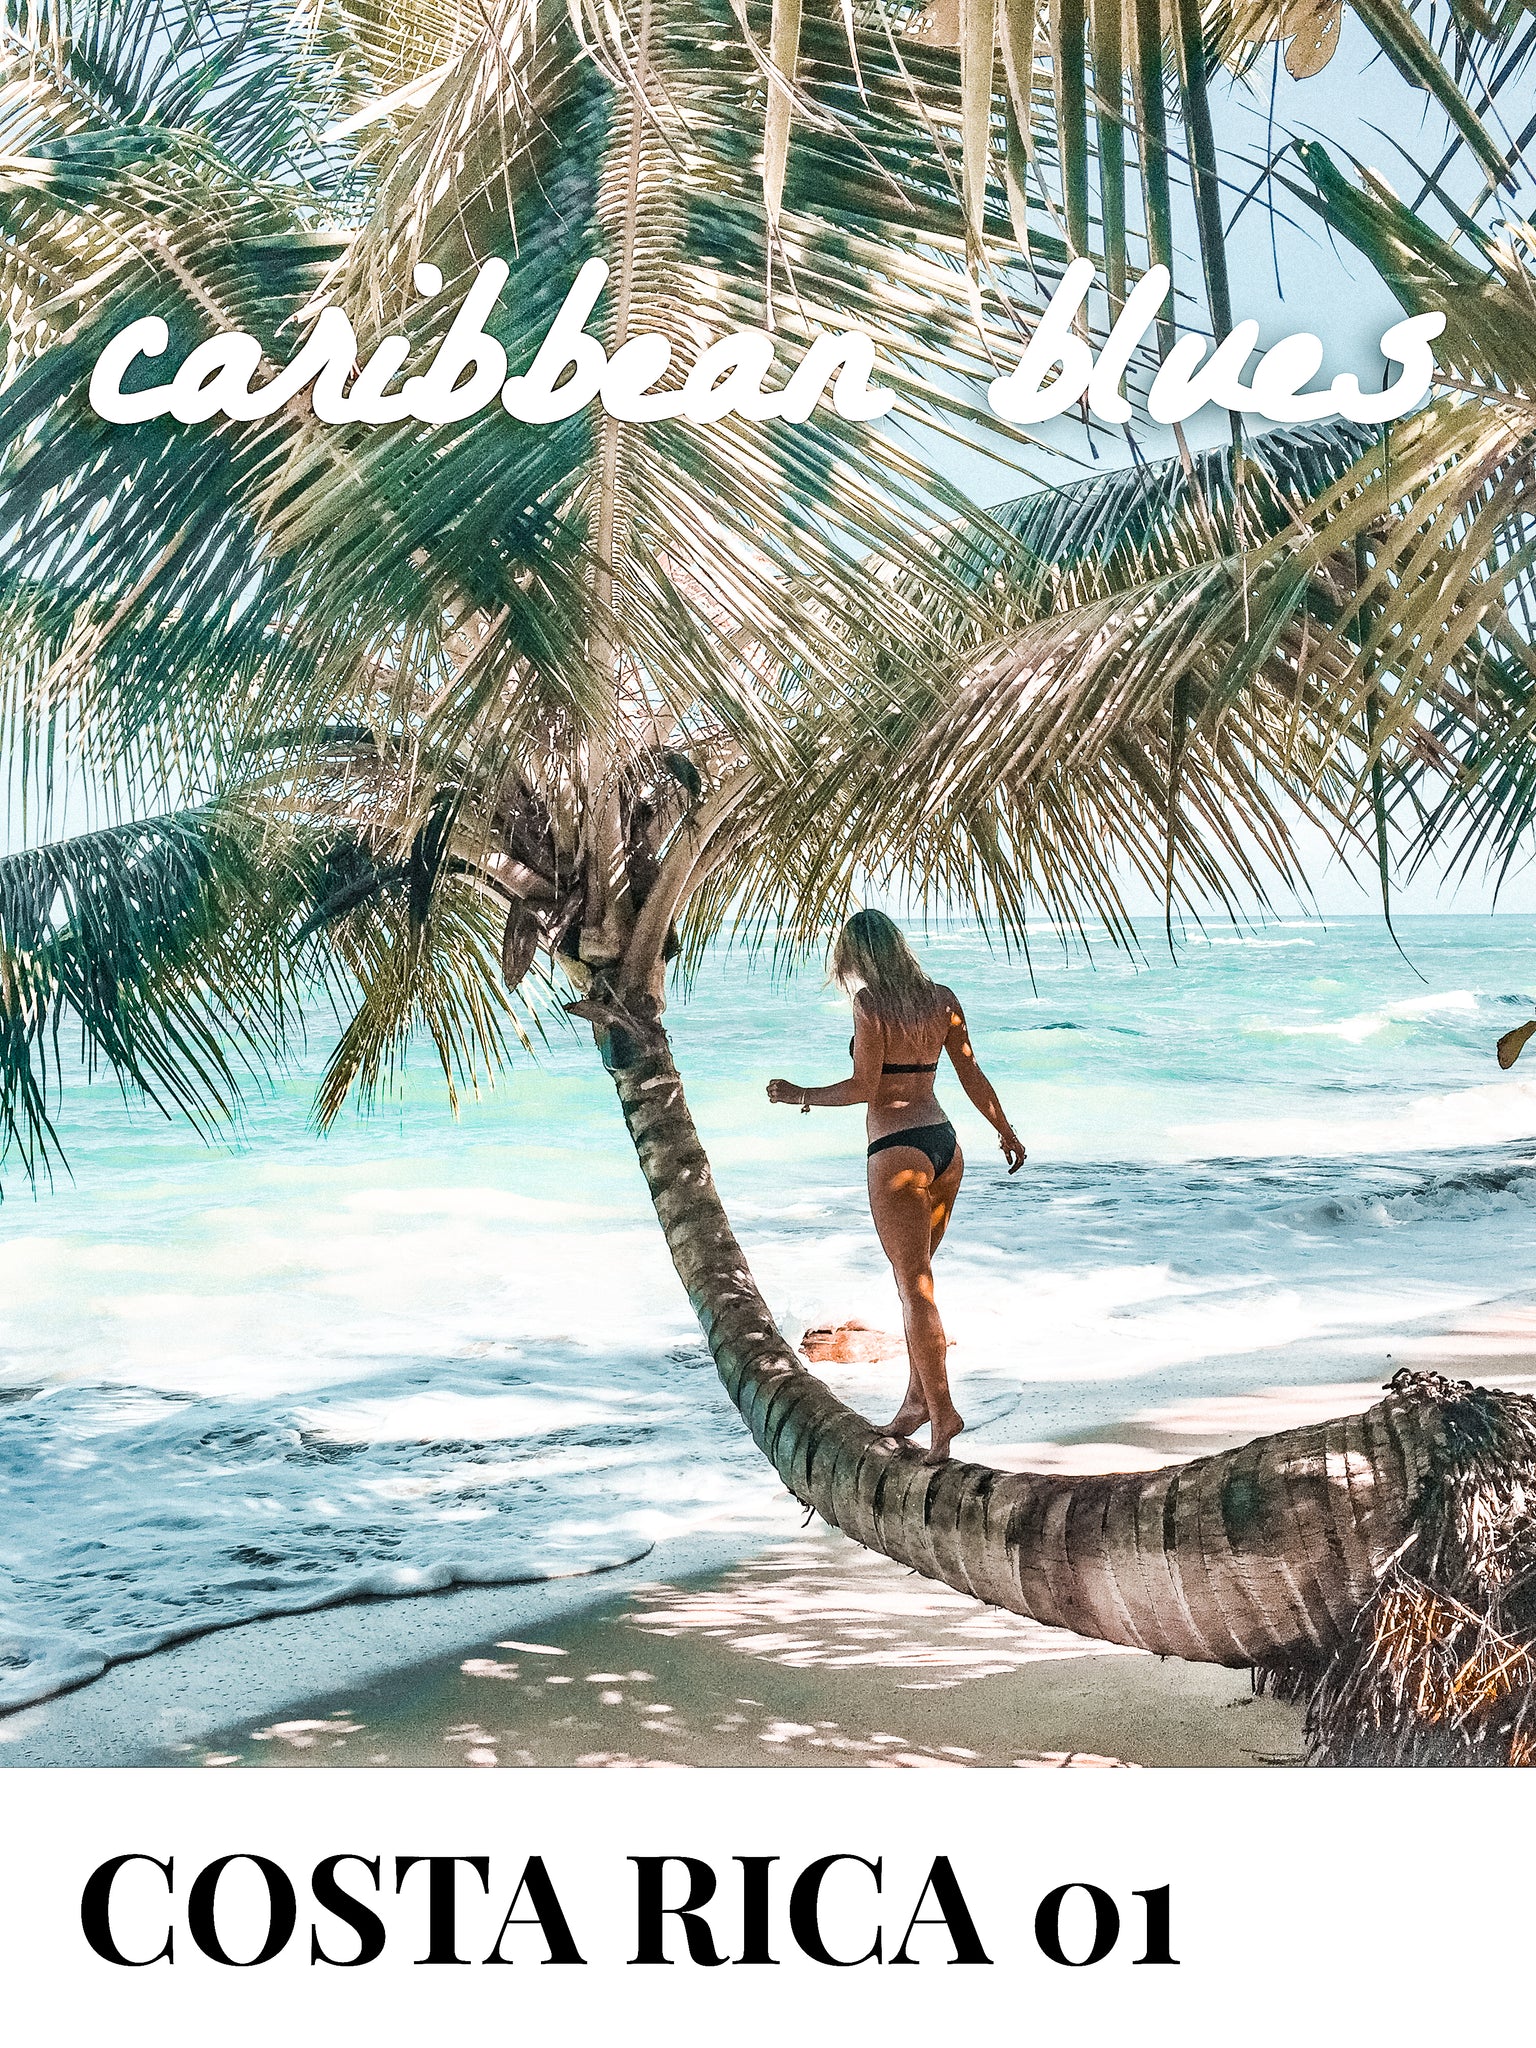 Caribbean Blues Mobile